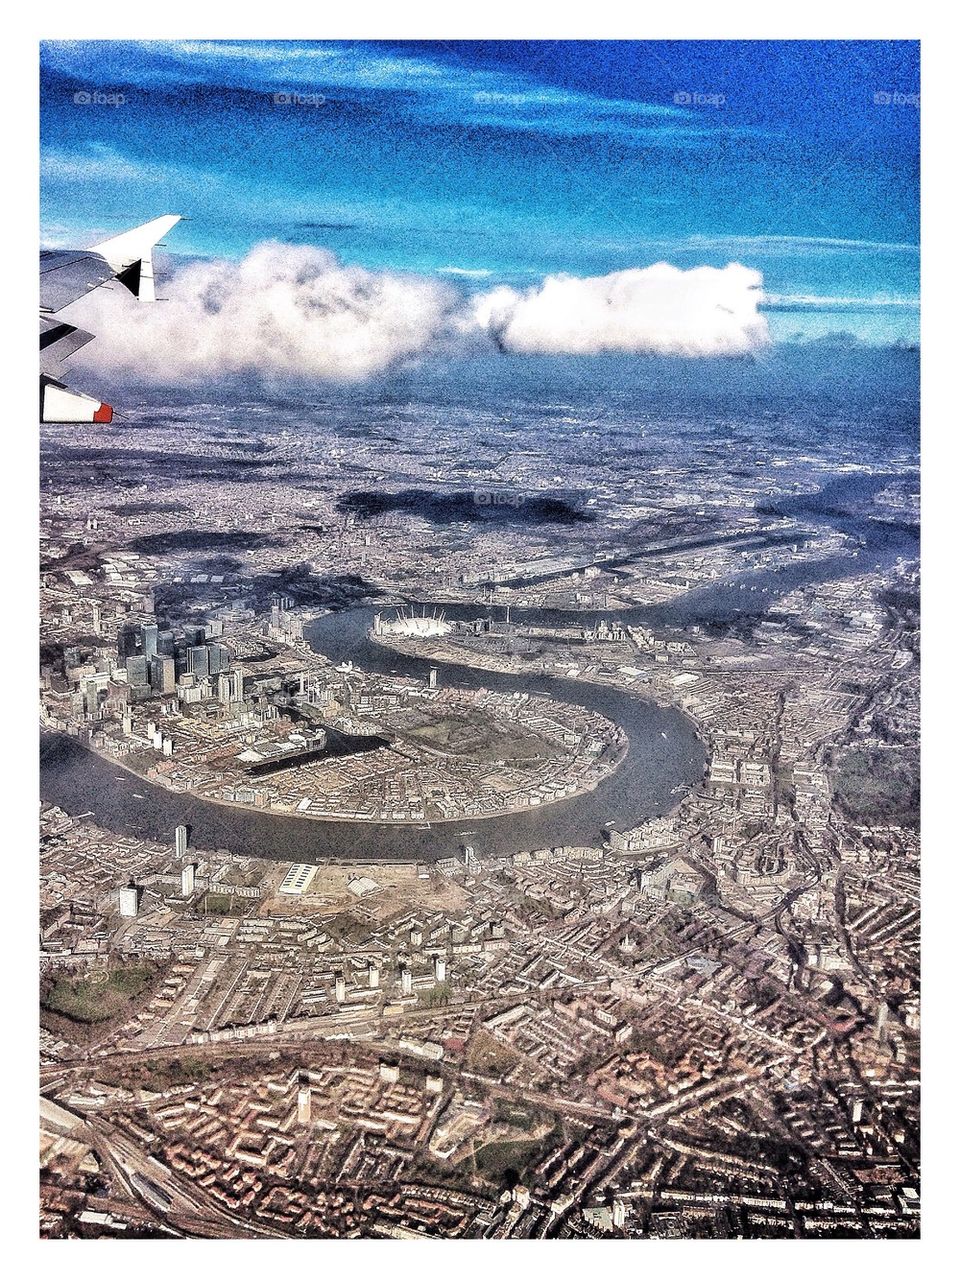 London by air